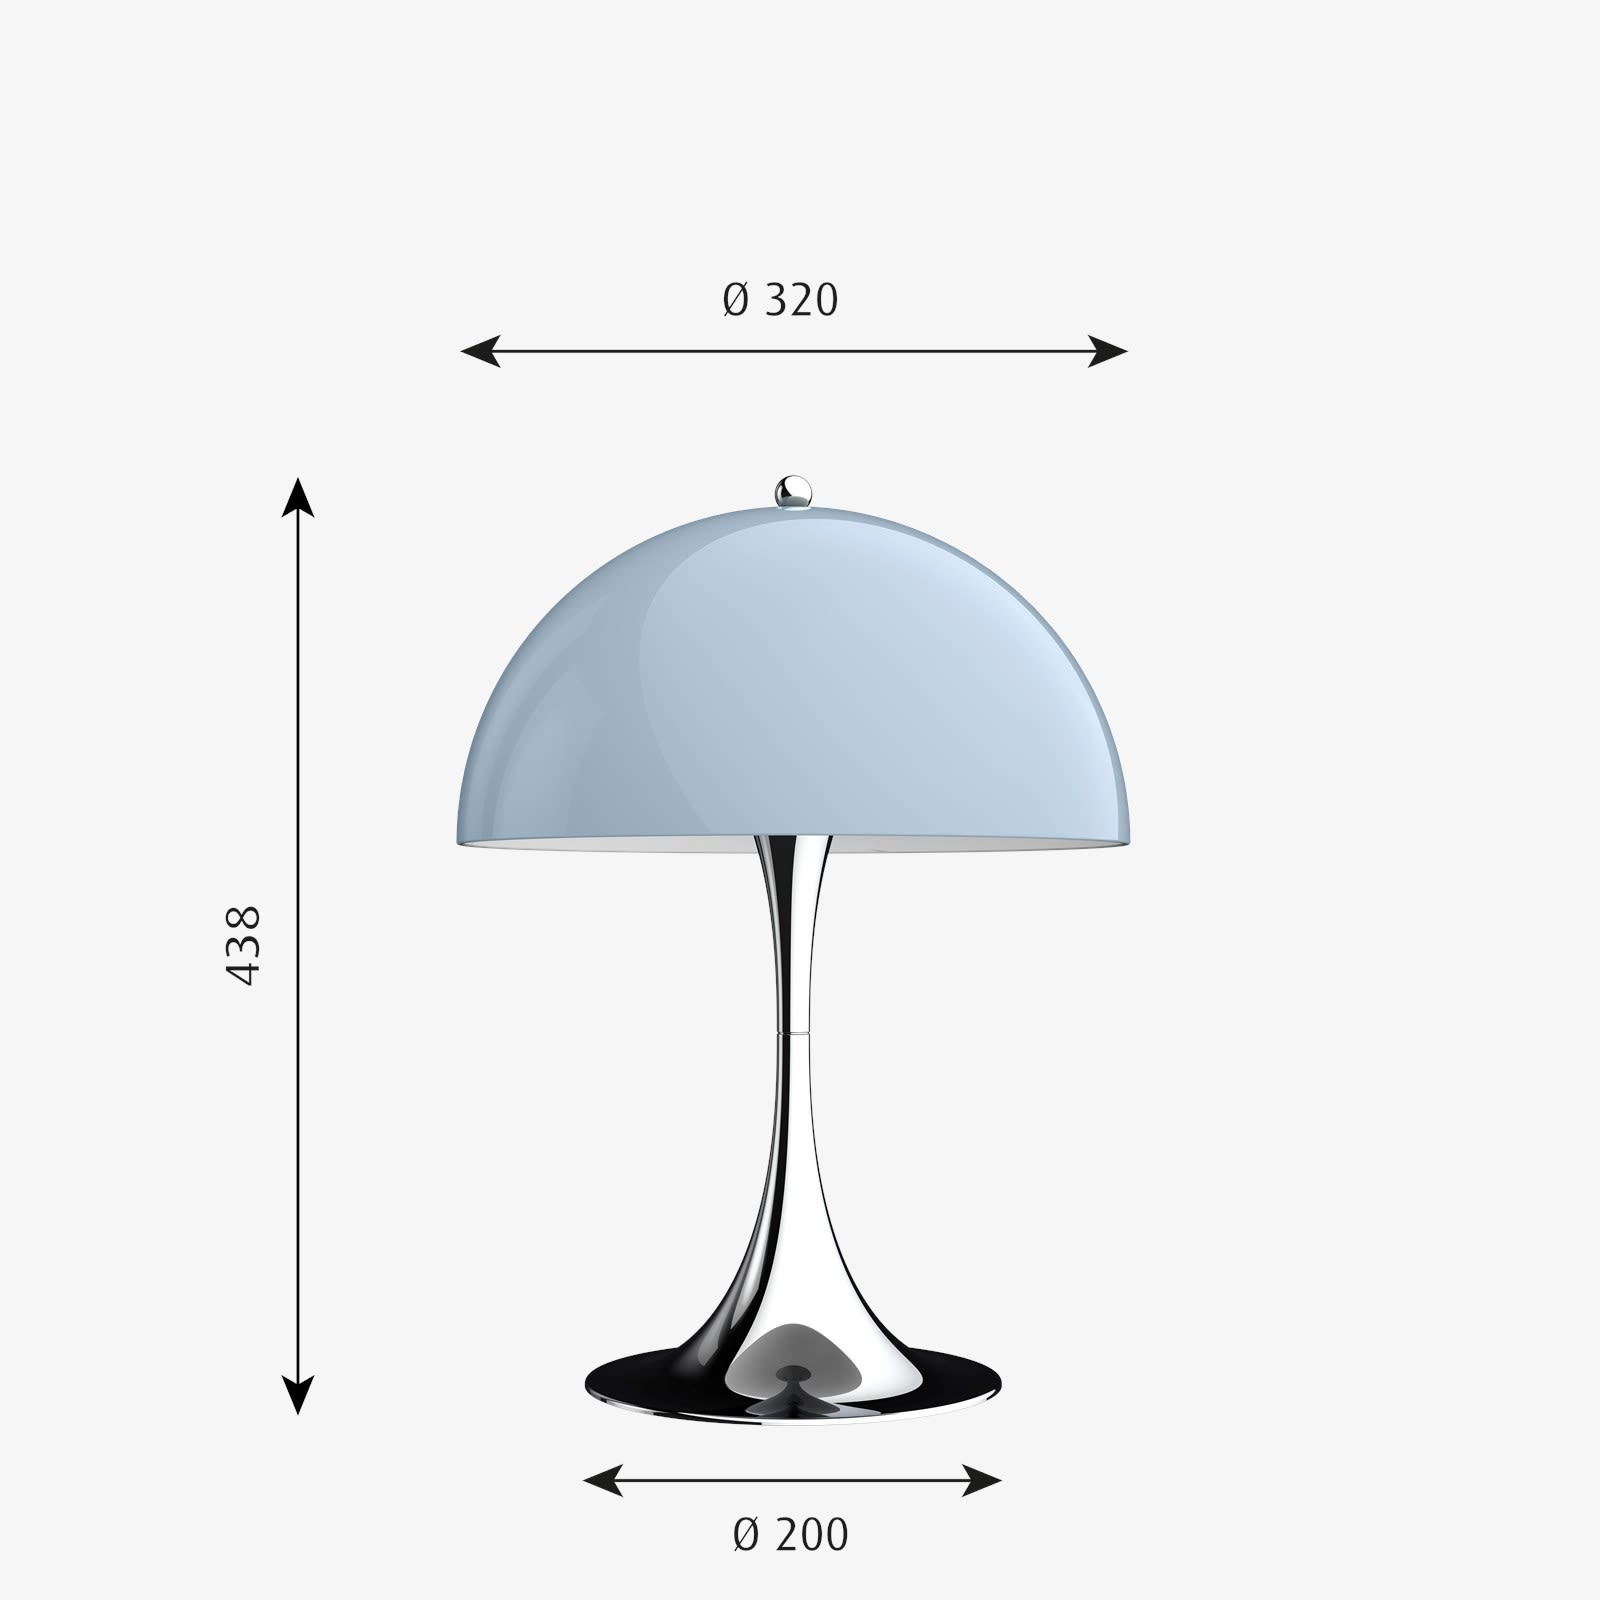 Louis Poulsen's Panthella Table 320 – Visual Merchandising and Store Design